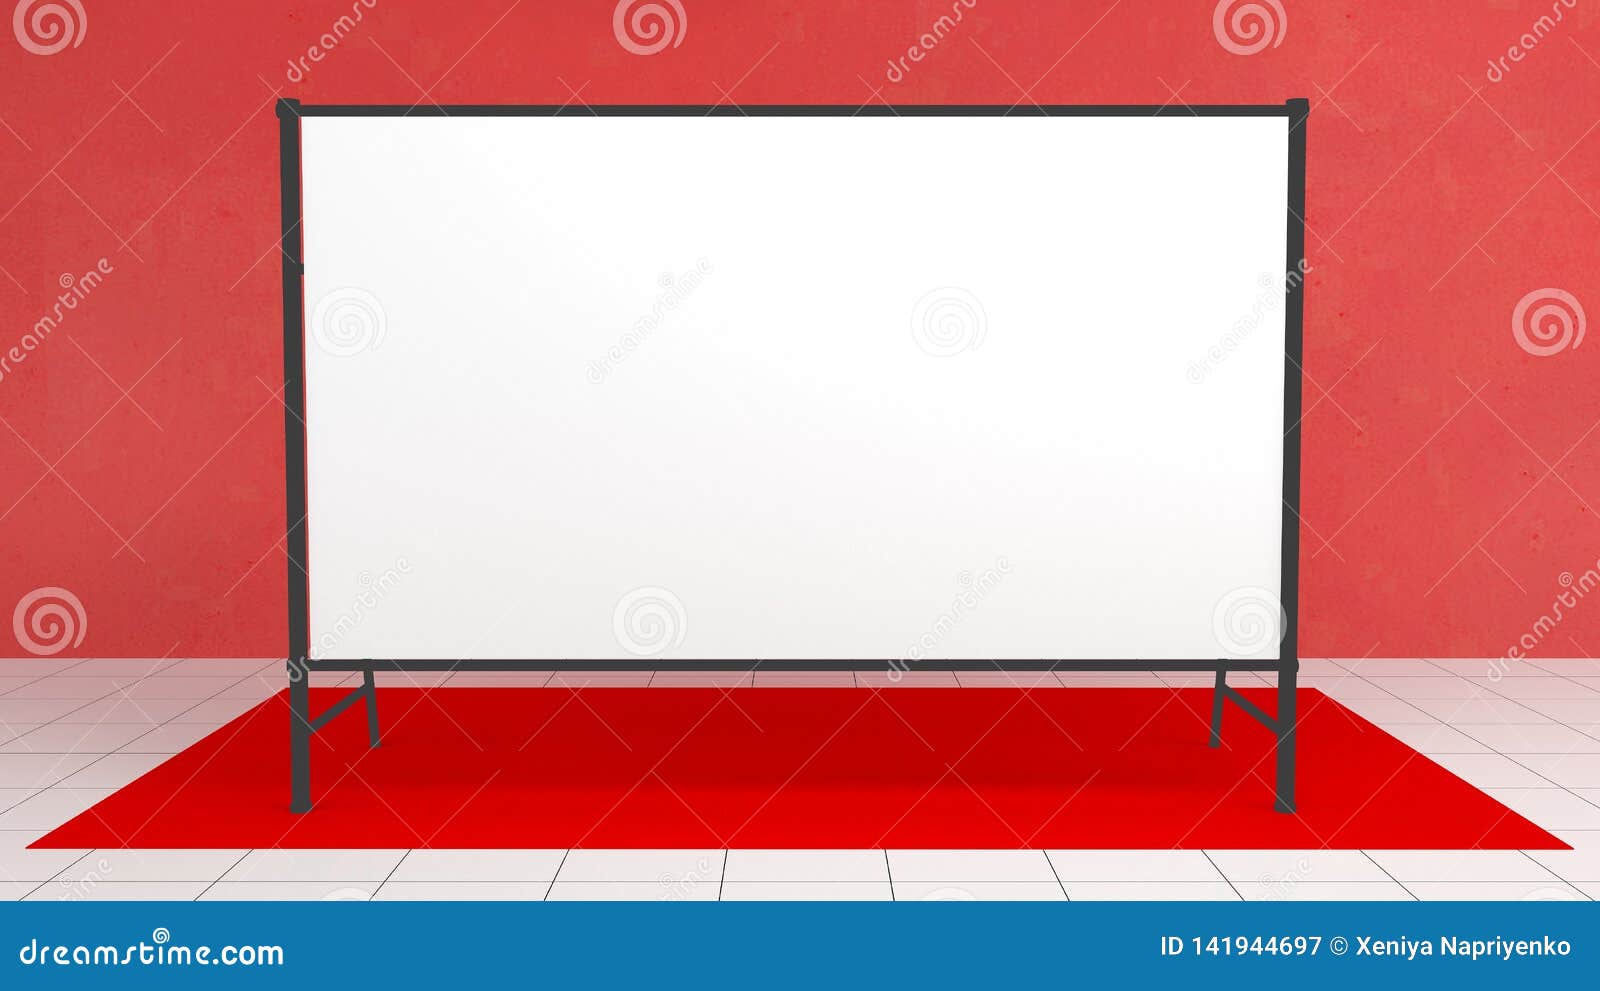 Download Backdrop, Press Banner 2x4 Meters With Red Carpit. 3d Render Template. Mockup Stock Image ...